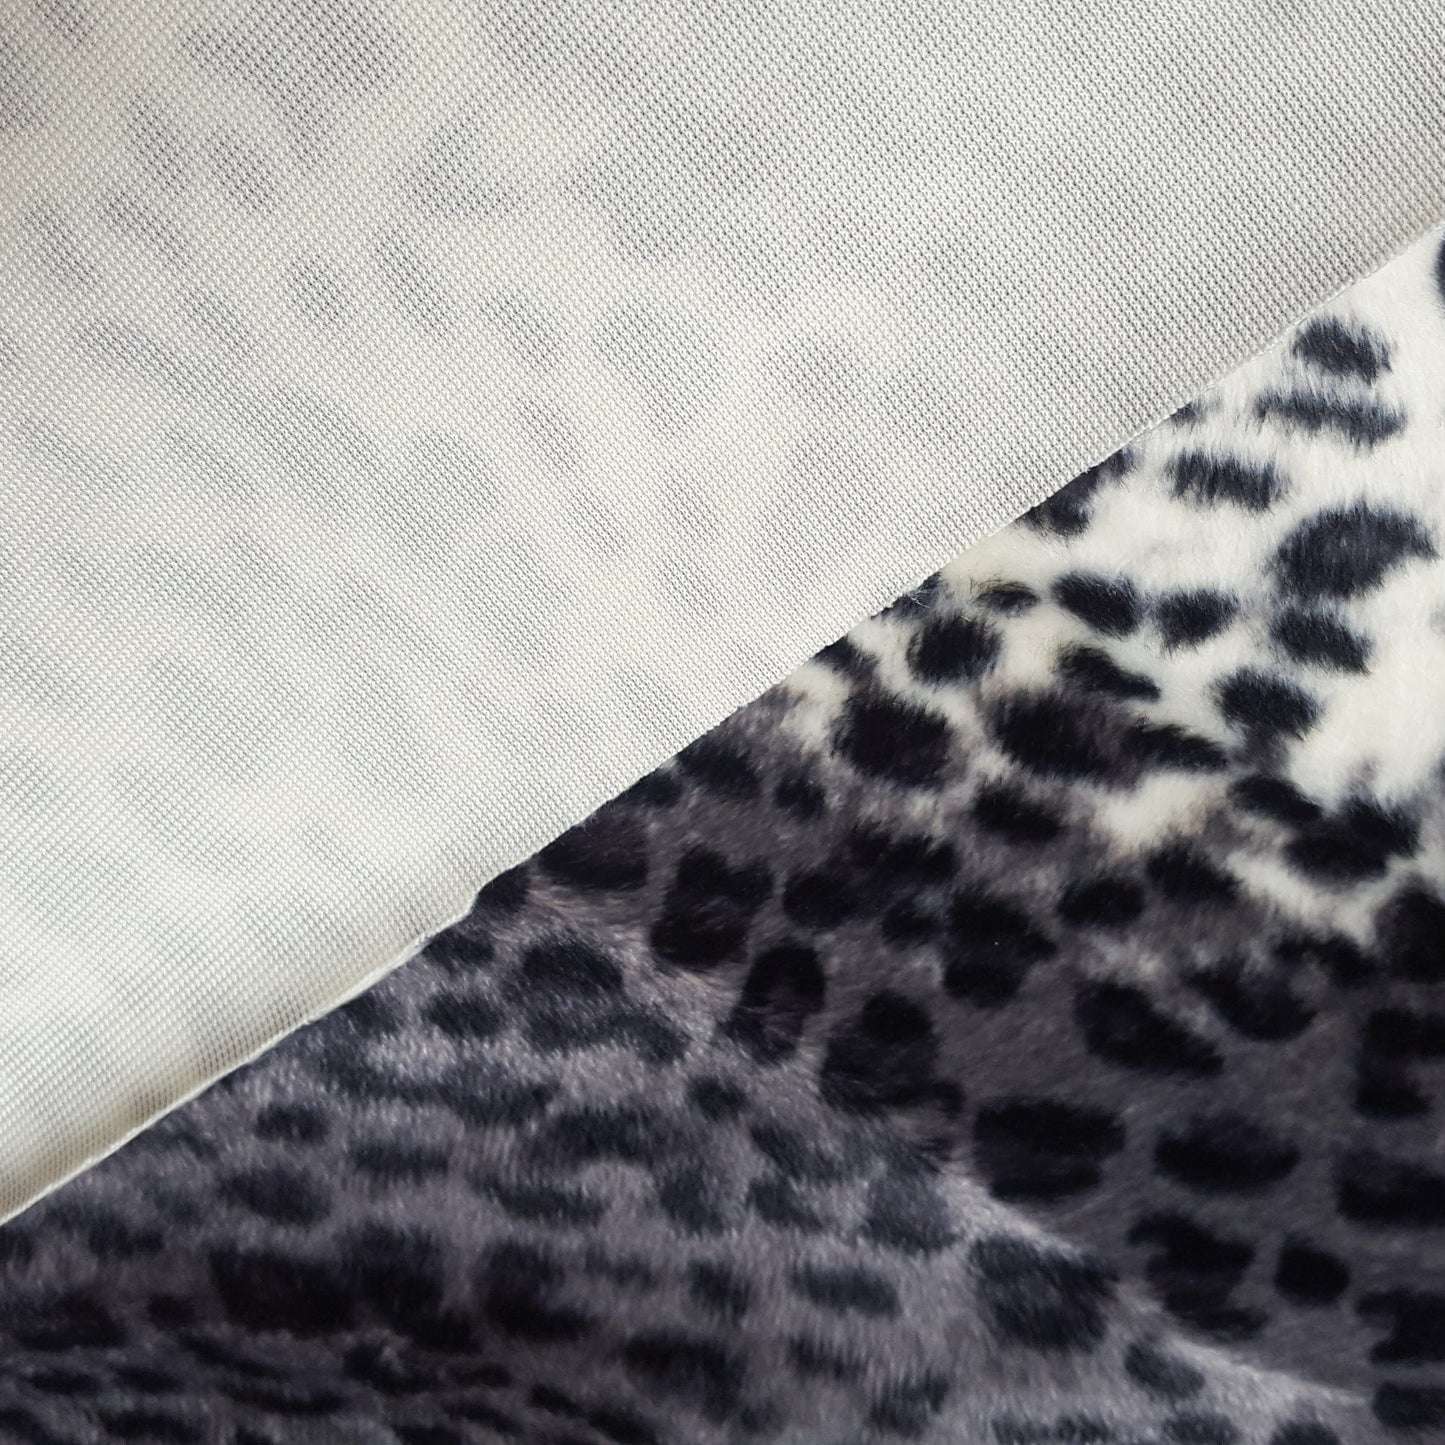 46cm Piece Faux Fur Fabric with Grey Leopard Print